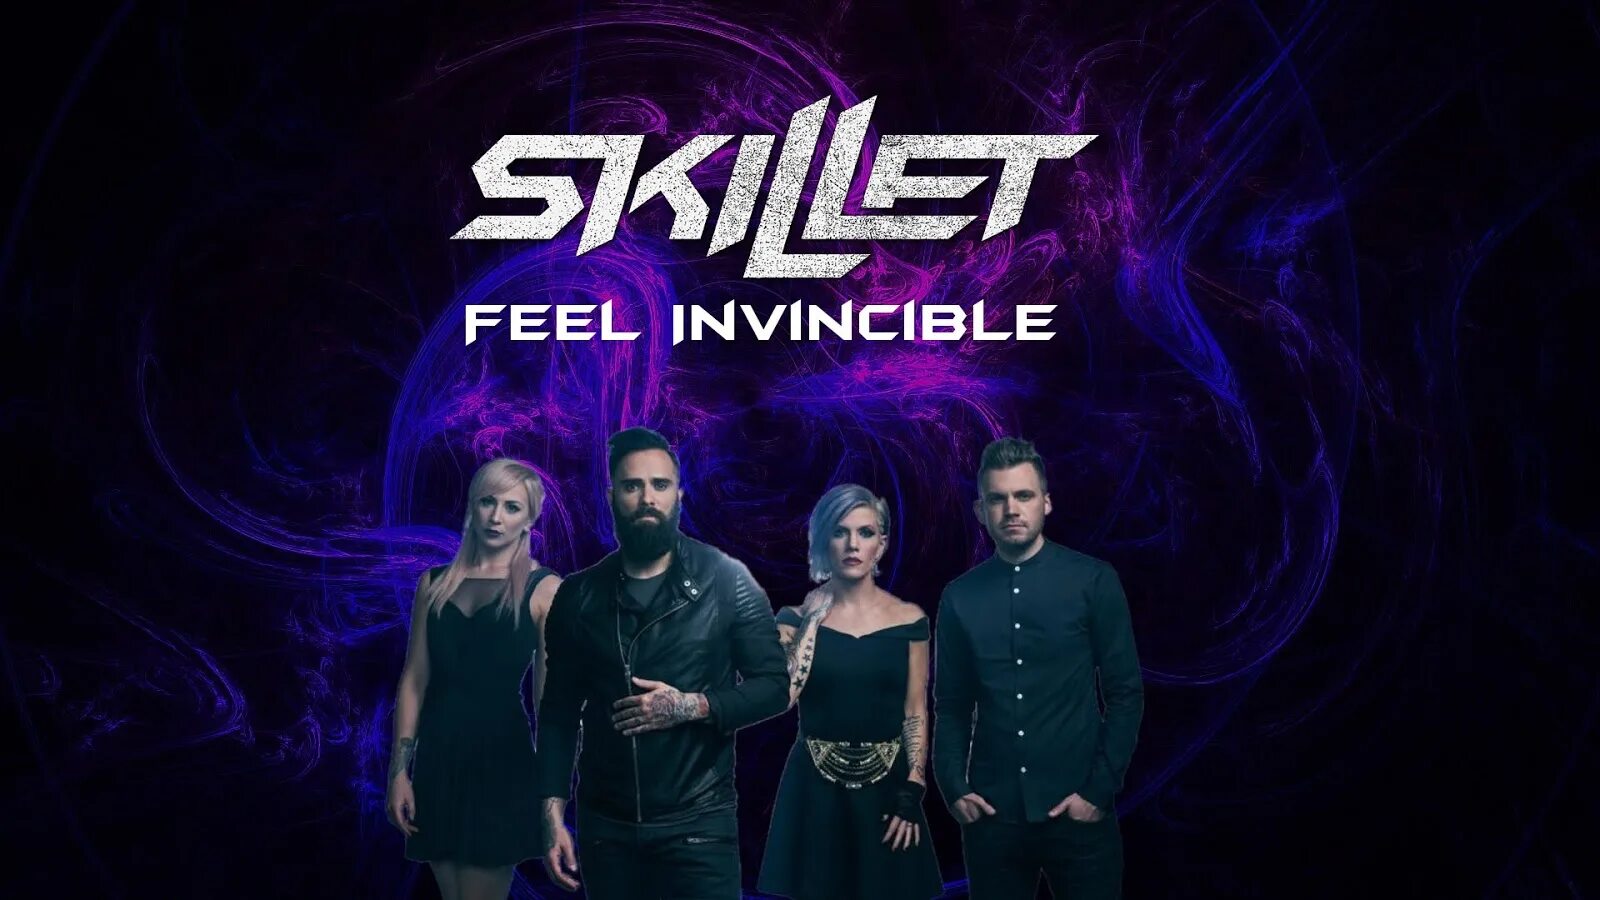 Feel invincible текст. Skillet логотип группы. Группа Skillet о группе. Группа Skillet 2009. Skillet 2000.